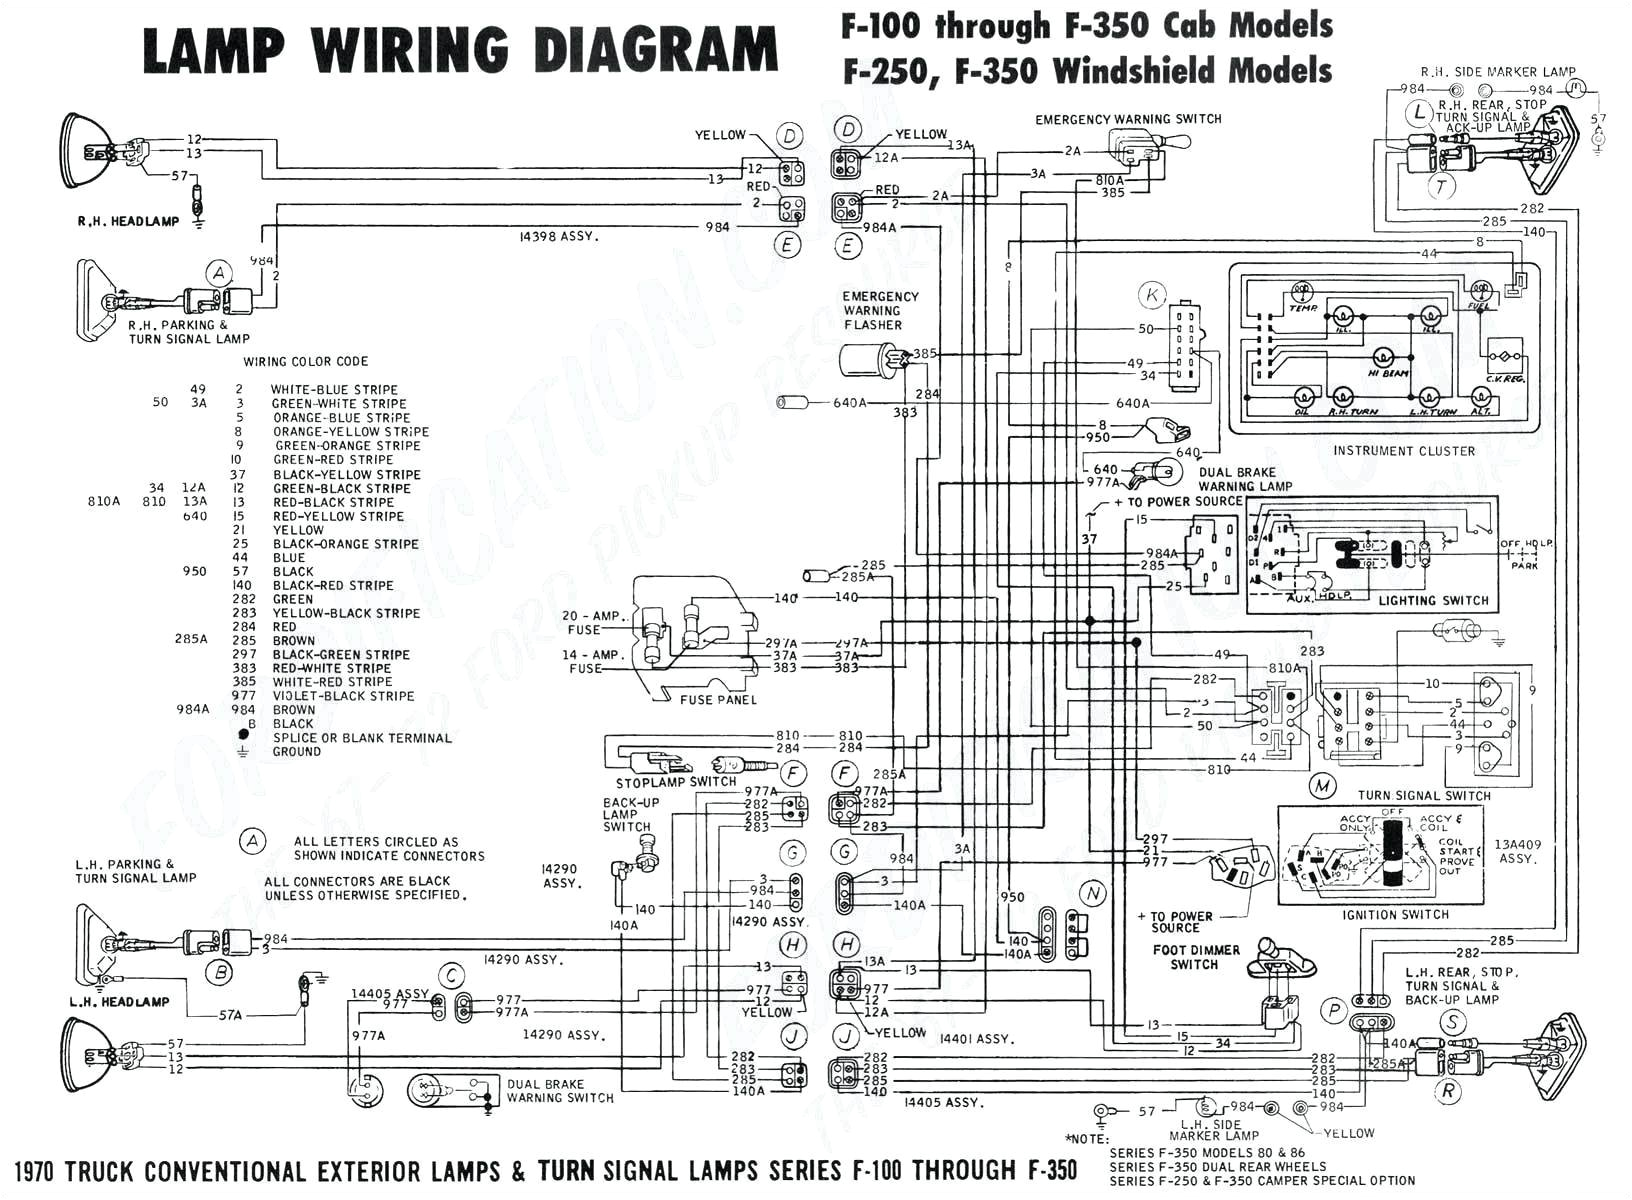 vw bug ignition coil wiring diagram unique vanagon ignition switch vw 1600 ignition coil wiring diagram